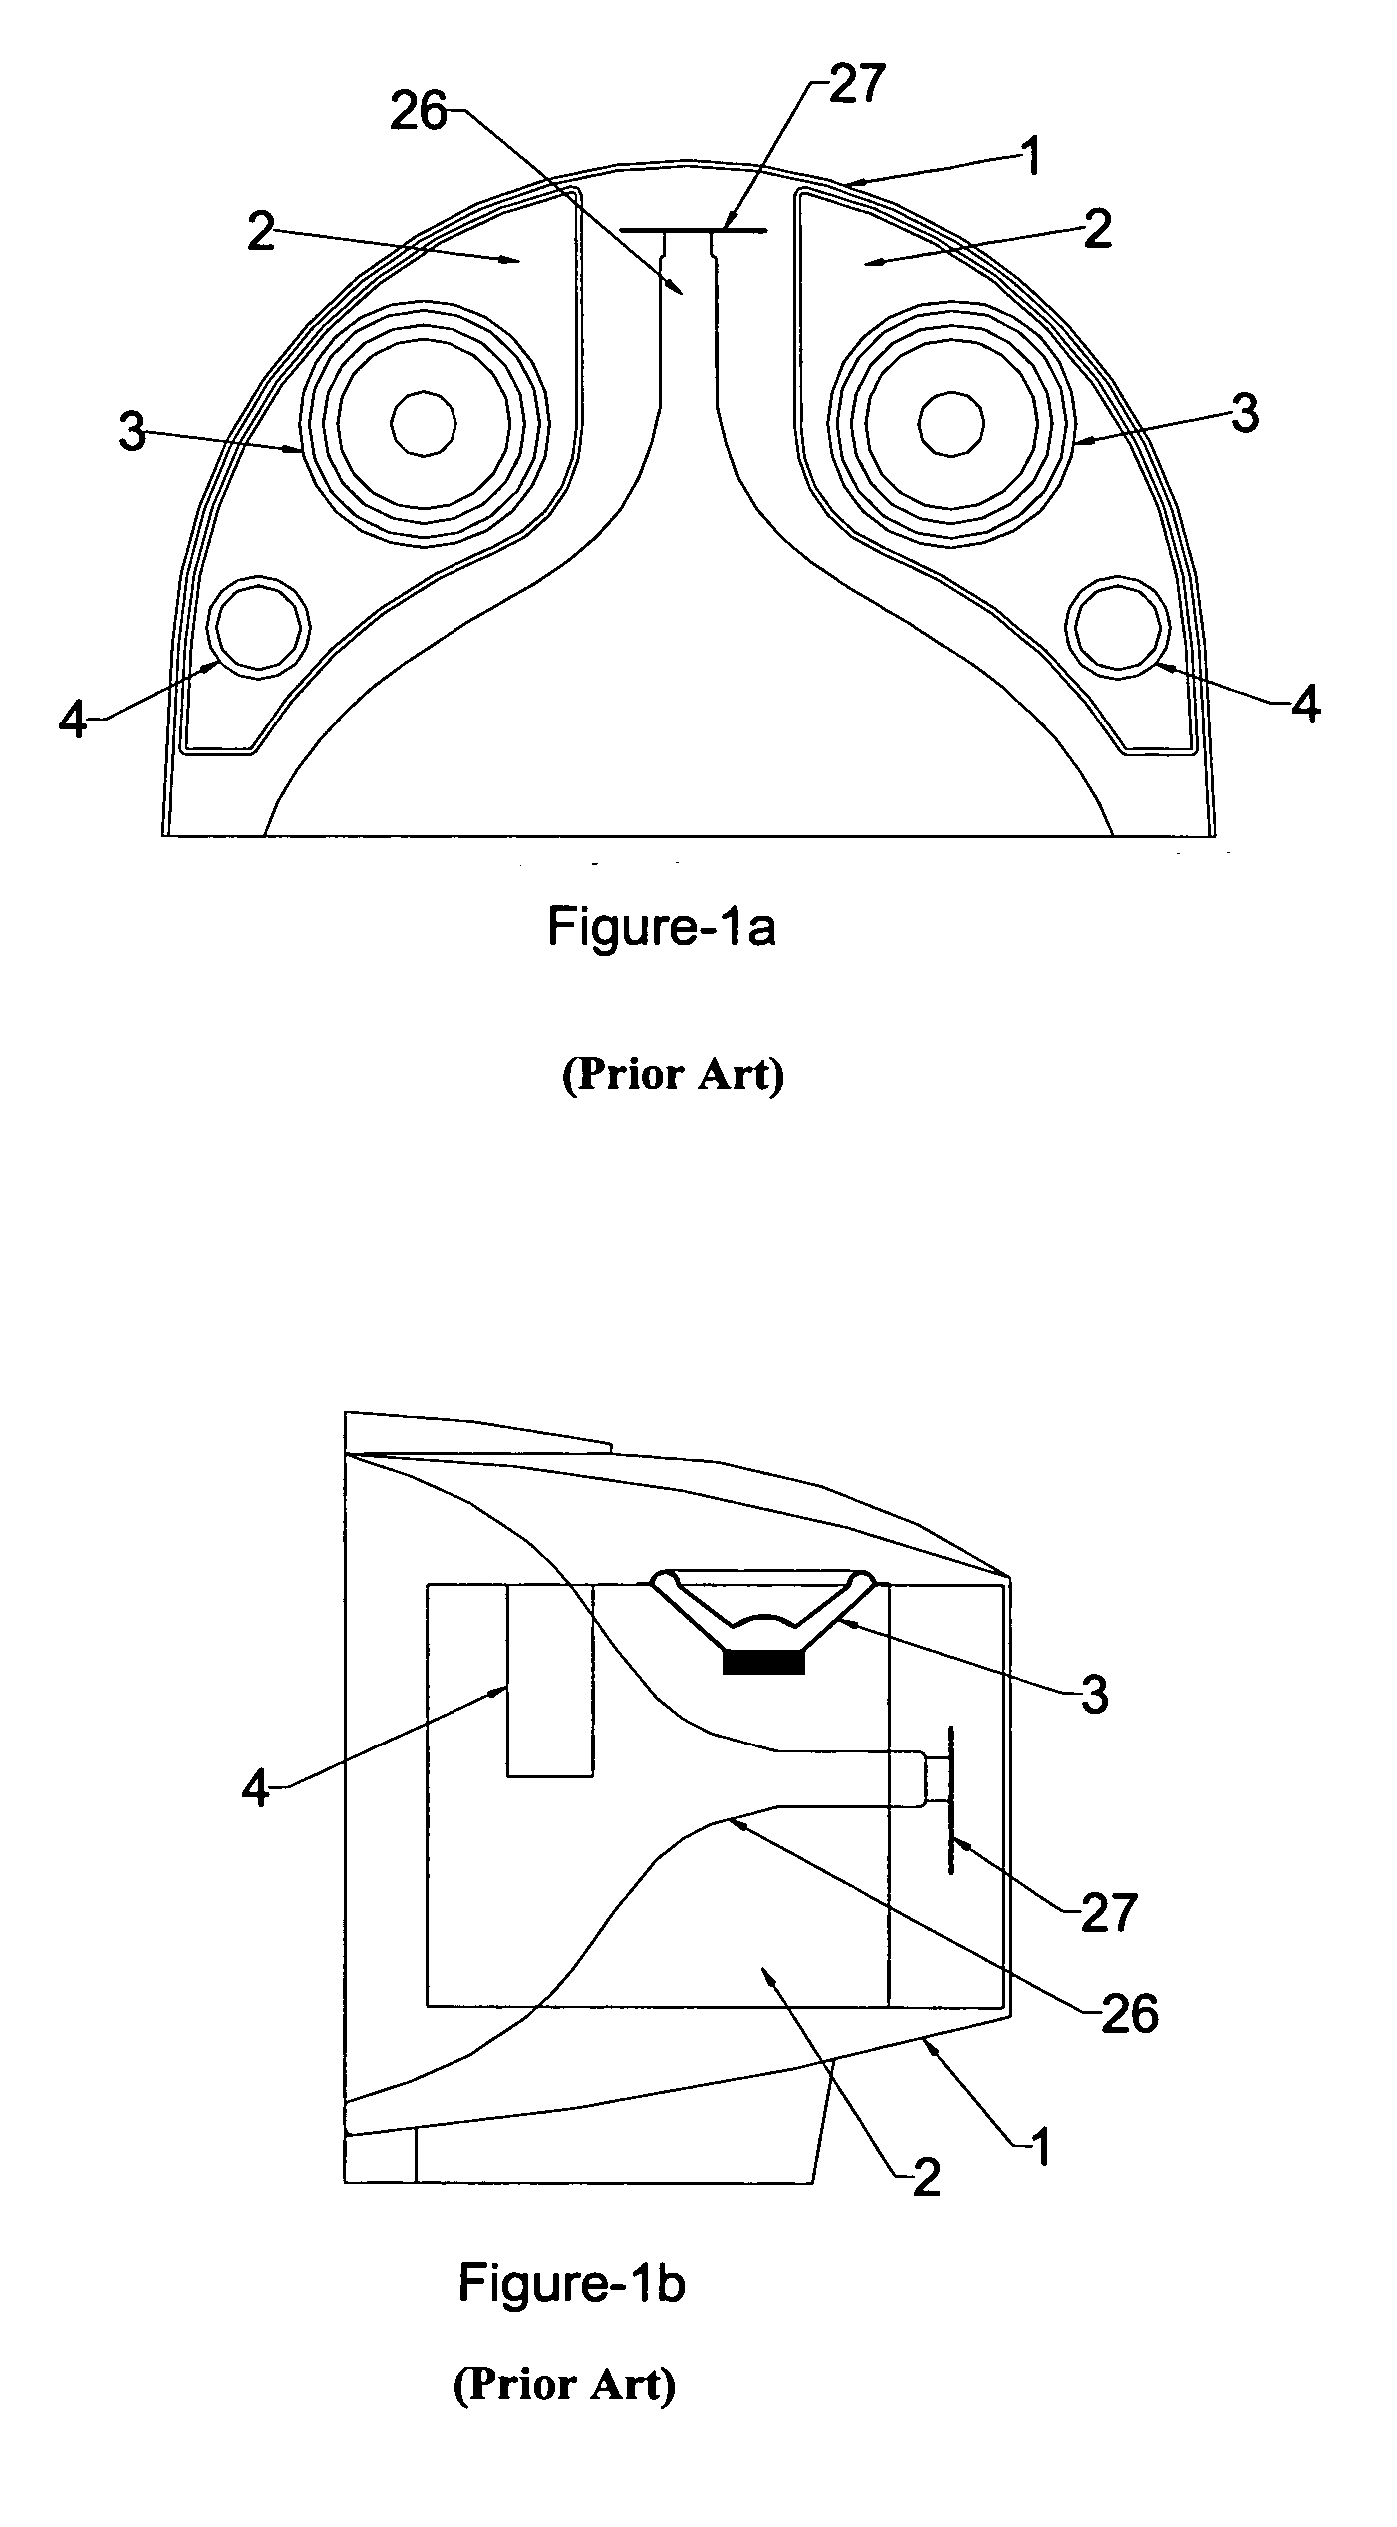 Contoured passive radiator and loudspeaker incorporating same